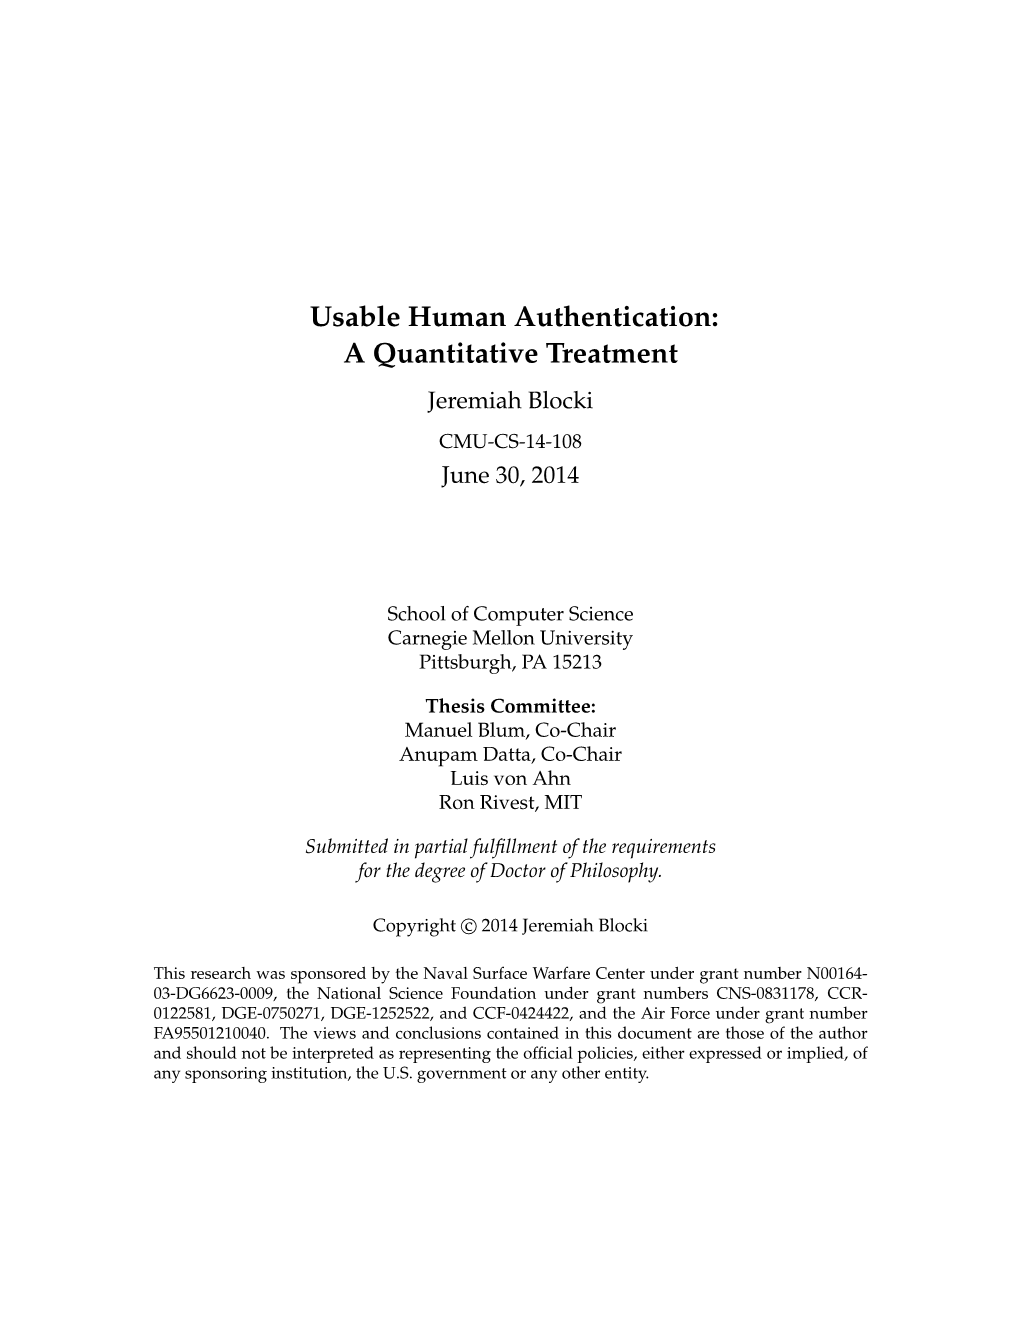 Usable Human Authentication: a Quantitative Treatment Jeremiah Blocki CMU-CS-14-108 June 30, 2014